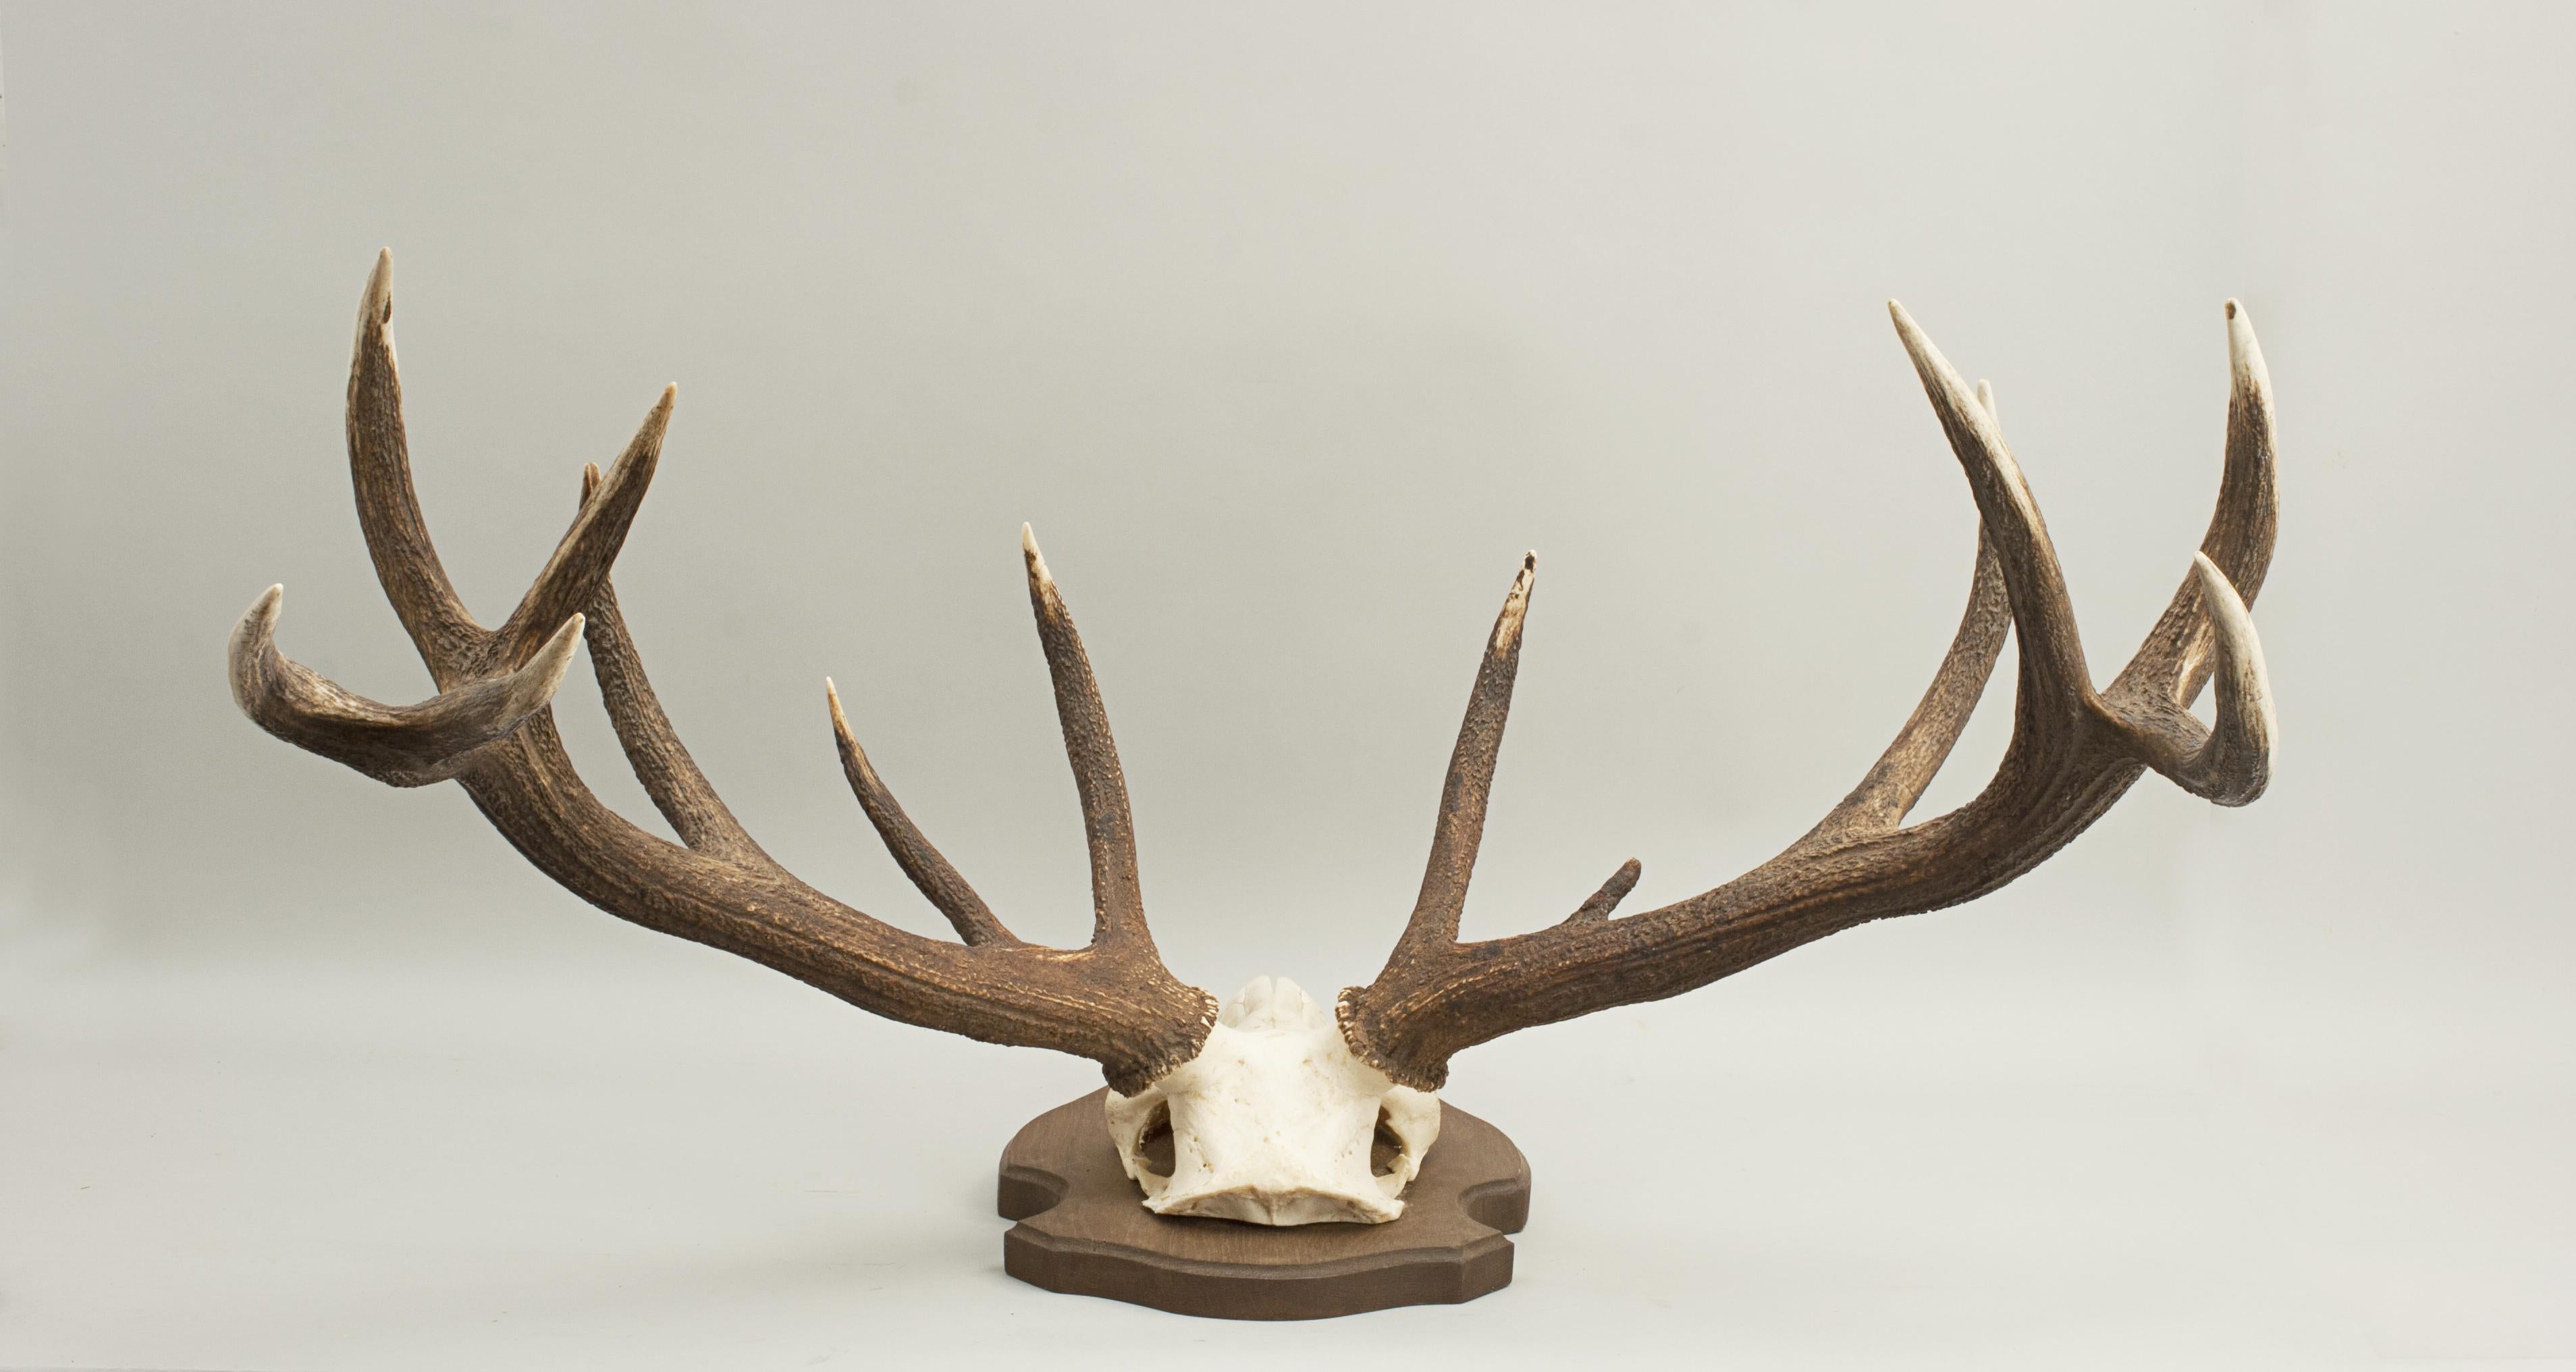 deer horns